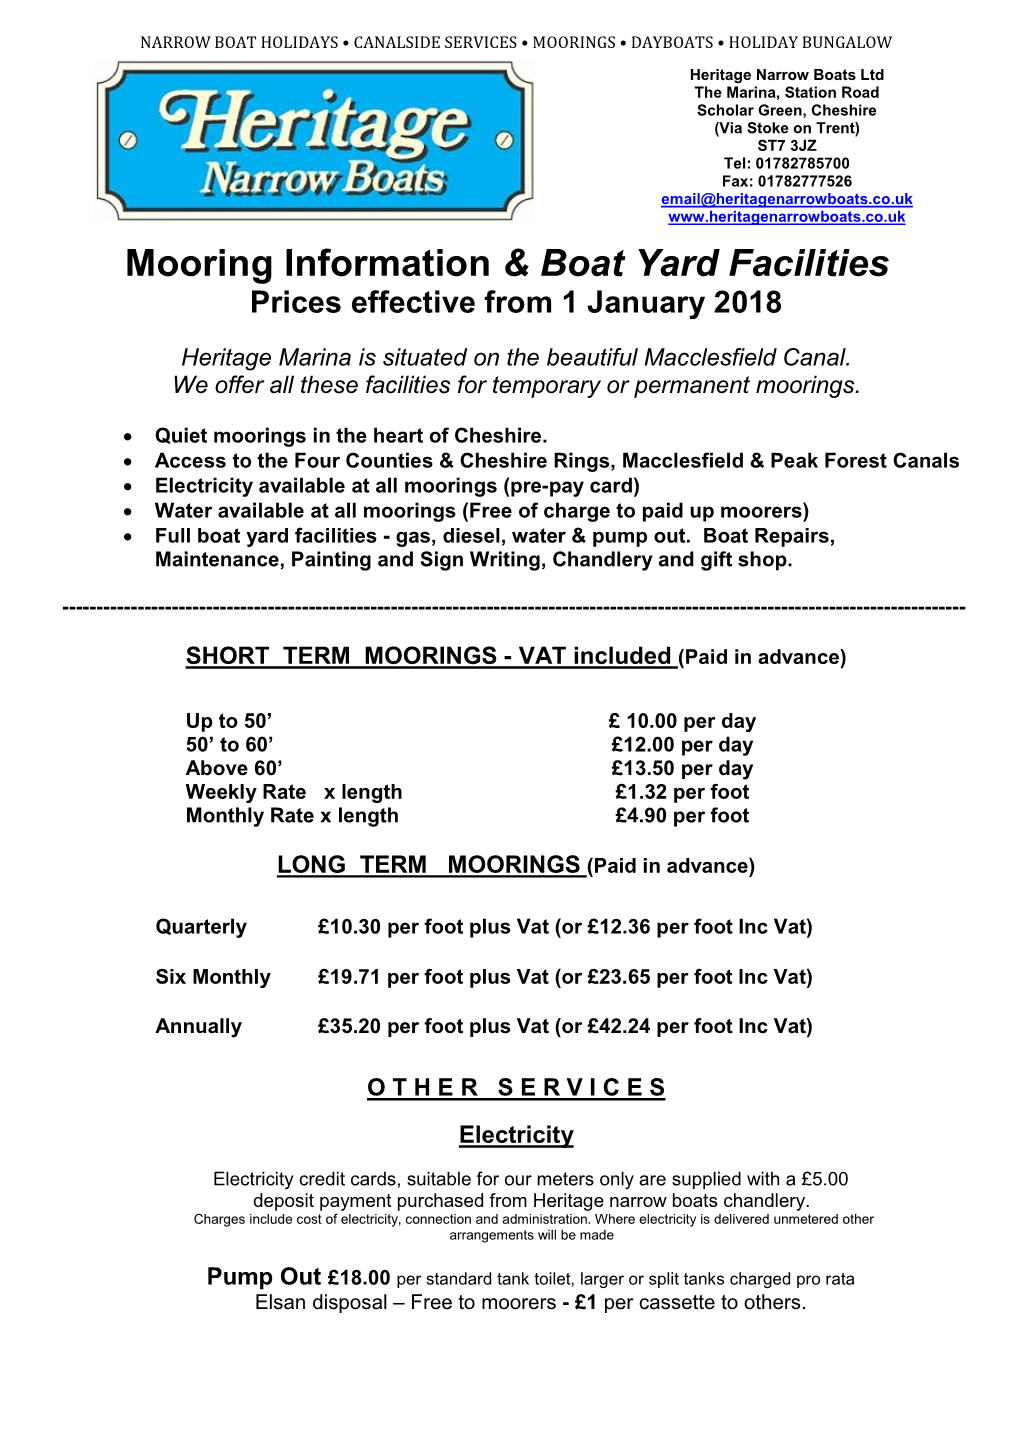 Mooring Information & Boat Yard Facilities